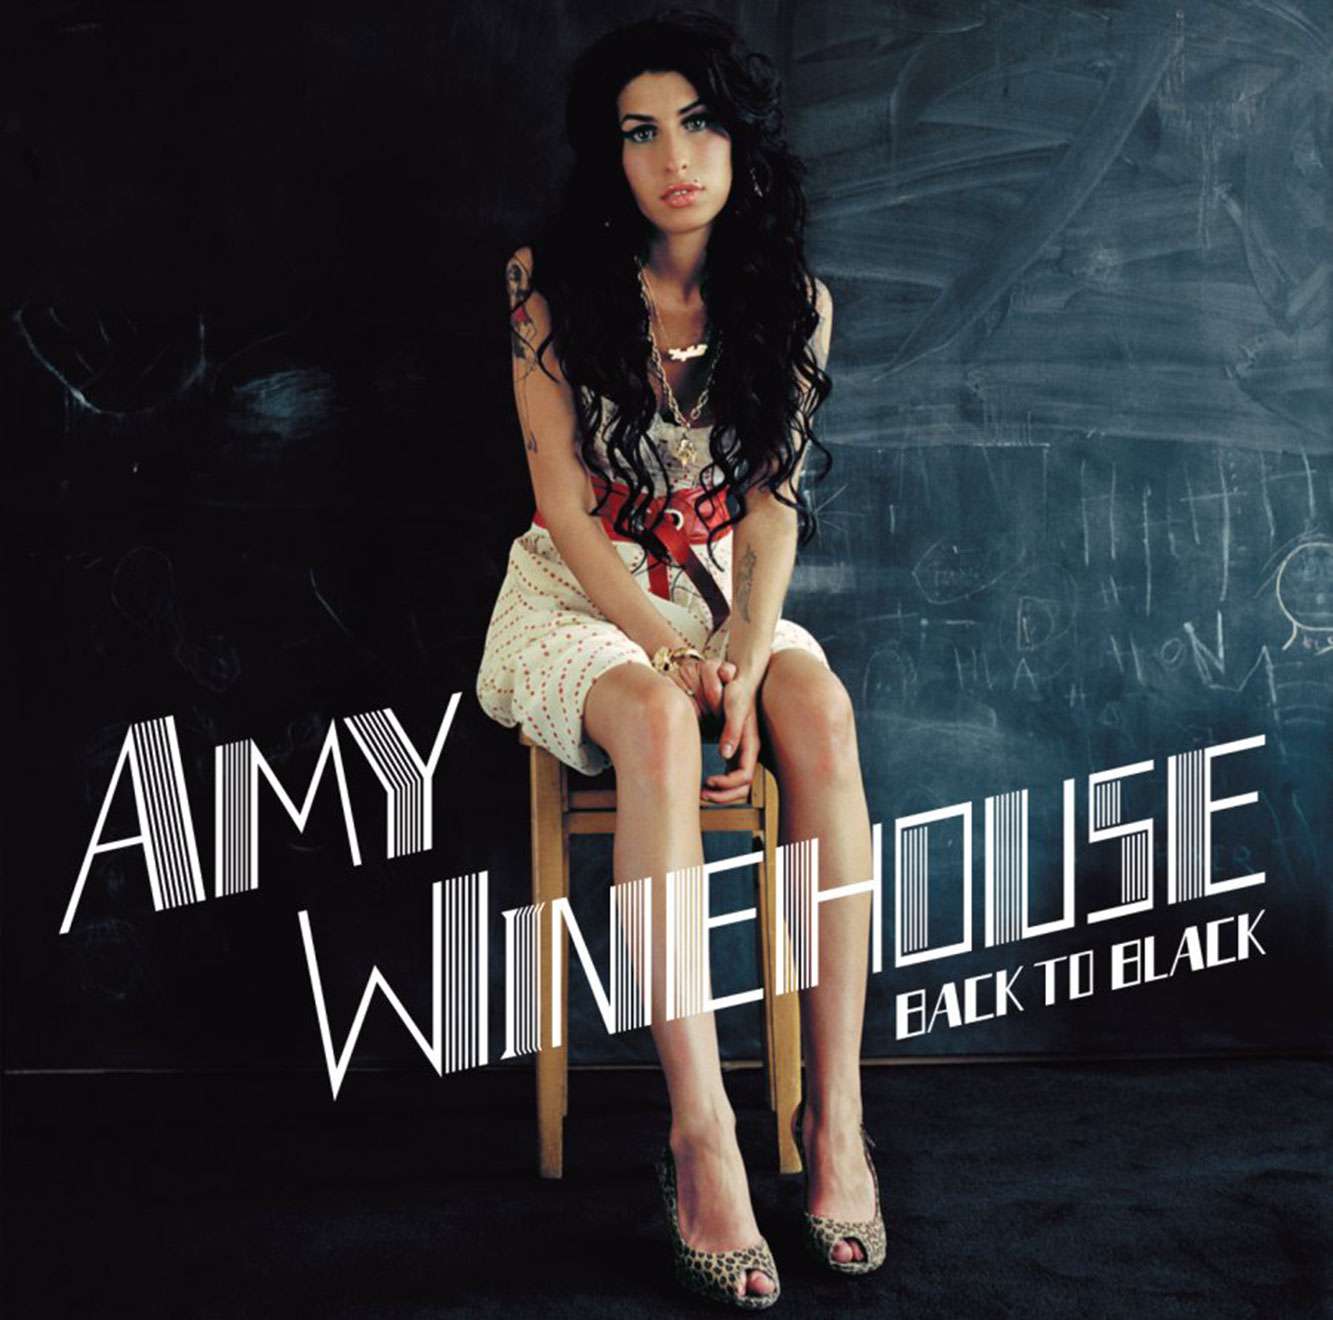 Amy Winehouse – Back to Black (2006)